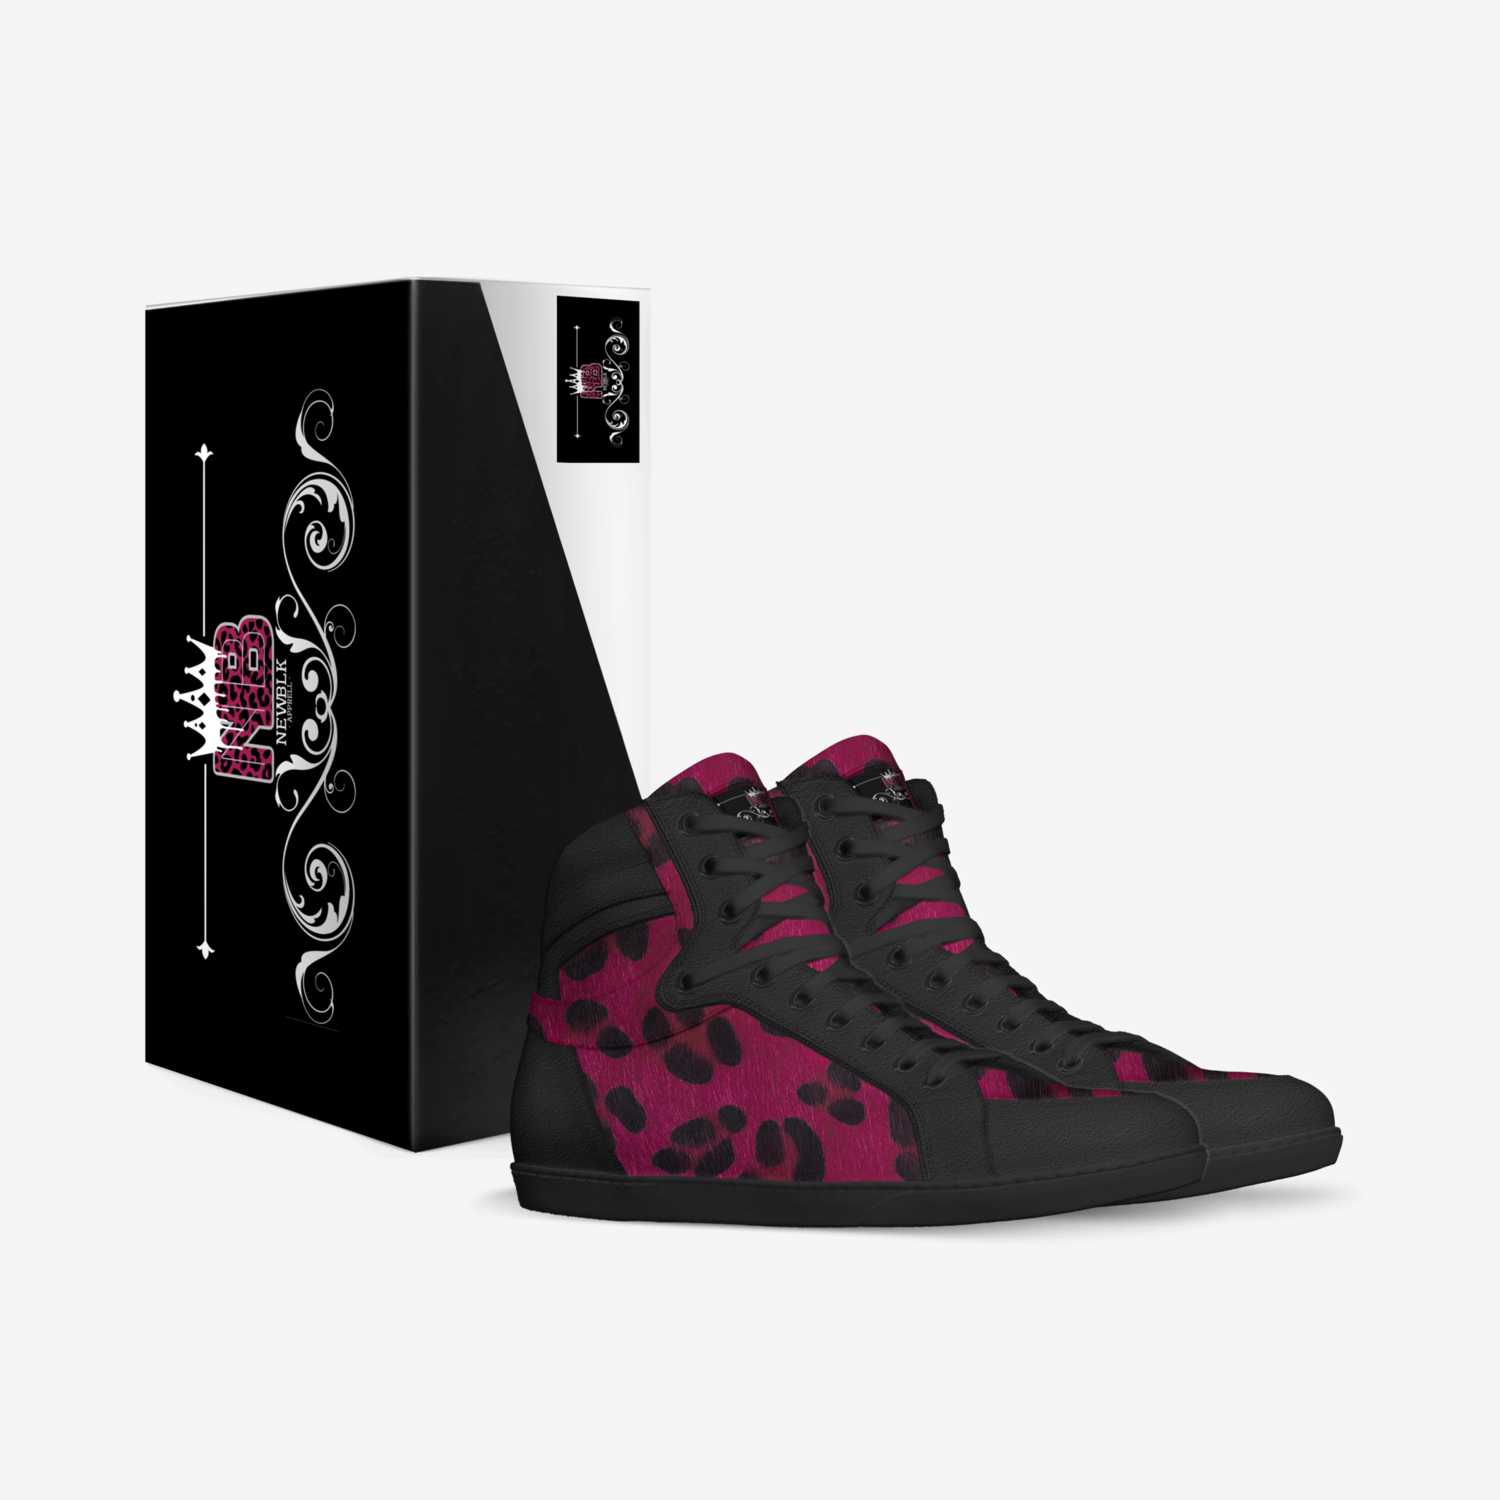 NewBLK  custom made in Italy shoes by Jahi Cudjoe | Box view